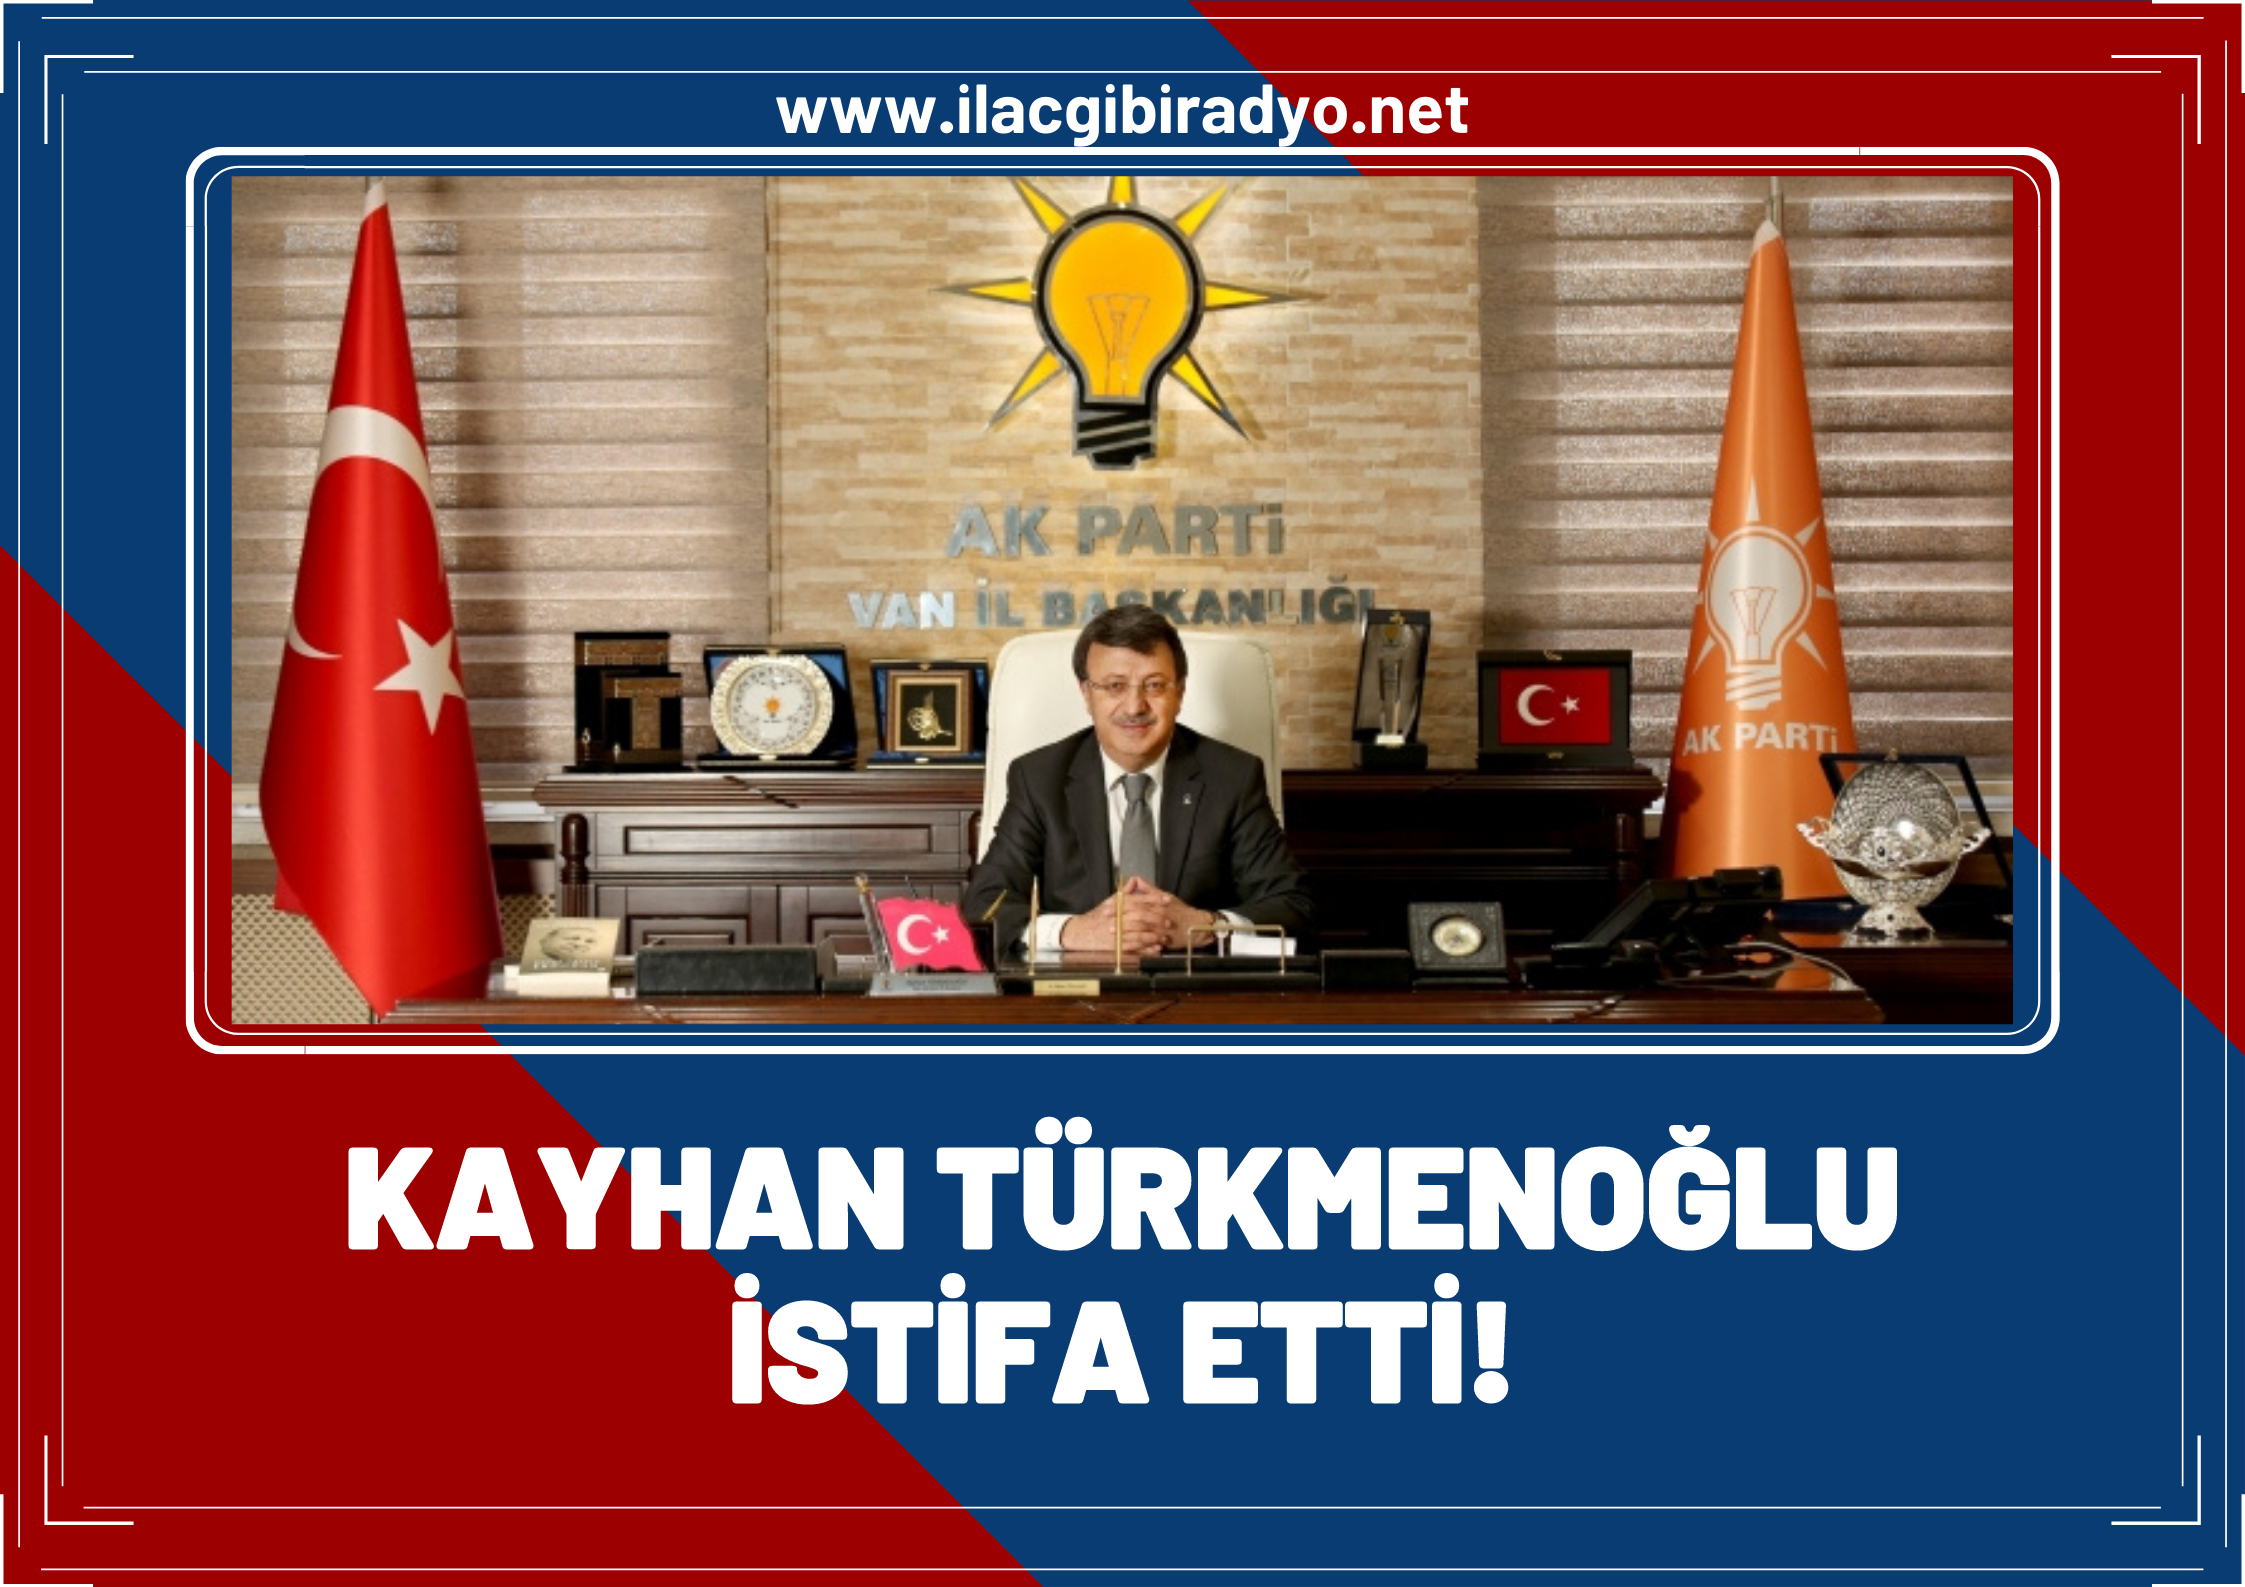 AK Parti Van İl Başkanı Kayhan Türkmenoğlu istifa etti!